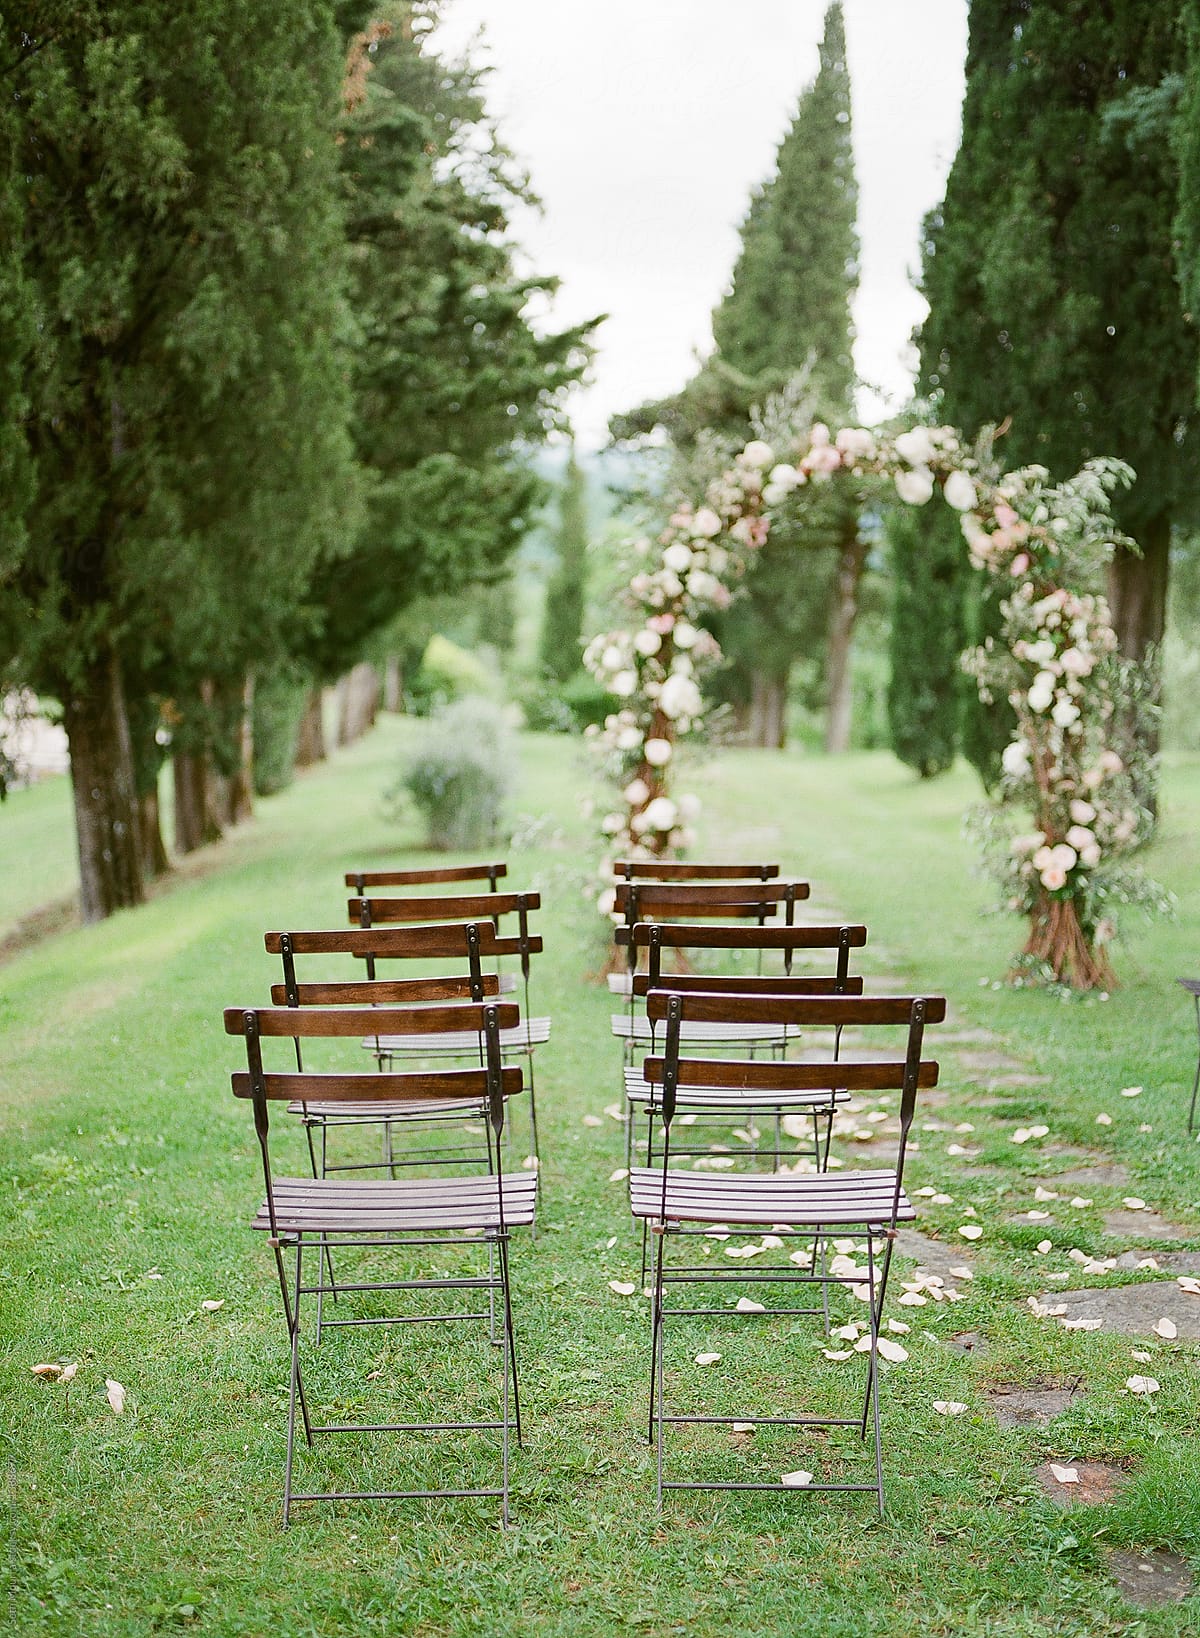 Intimate wedding ceremony in Tuscany